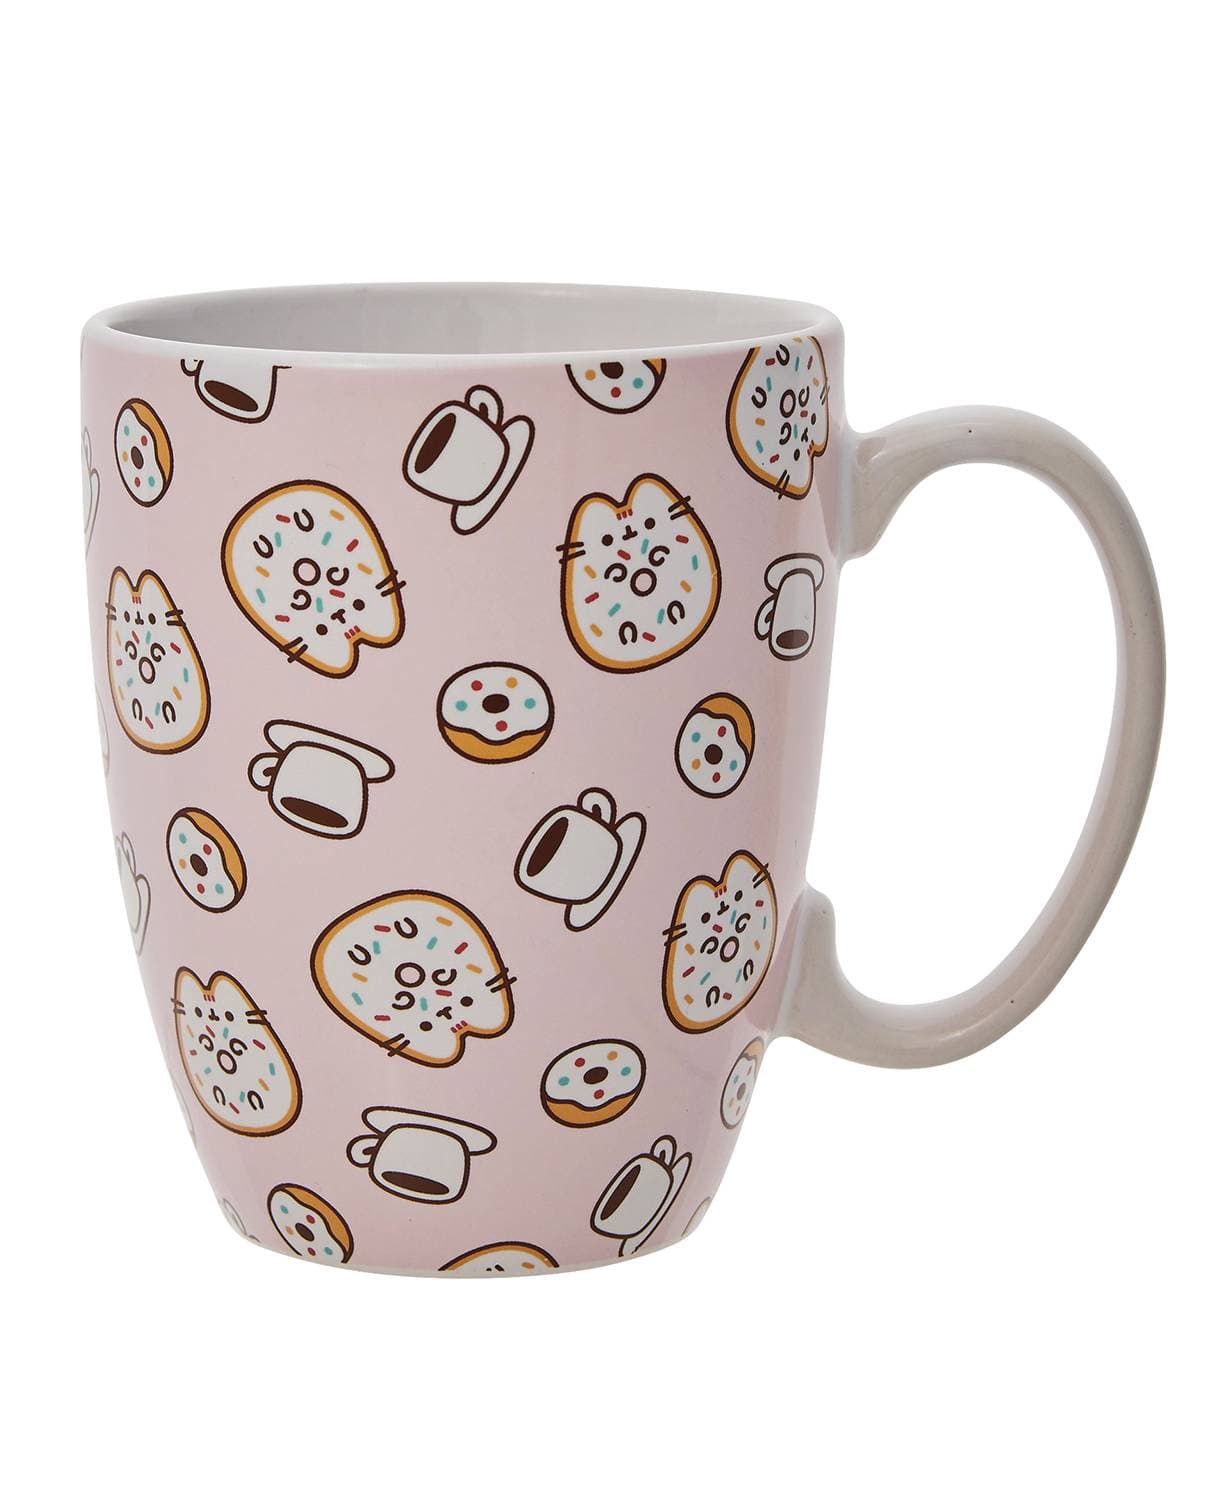 Enesco: Pusheen the Cat - Ceramic Mug 12 Oz., Donuts & Coffee